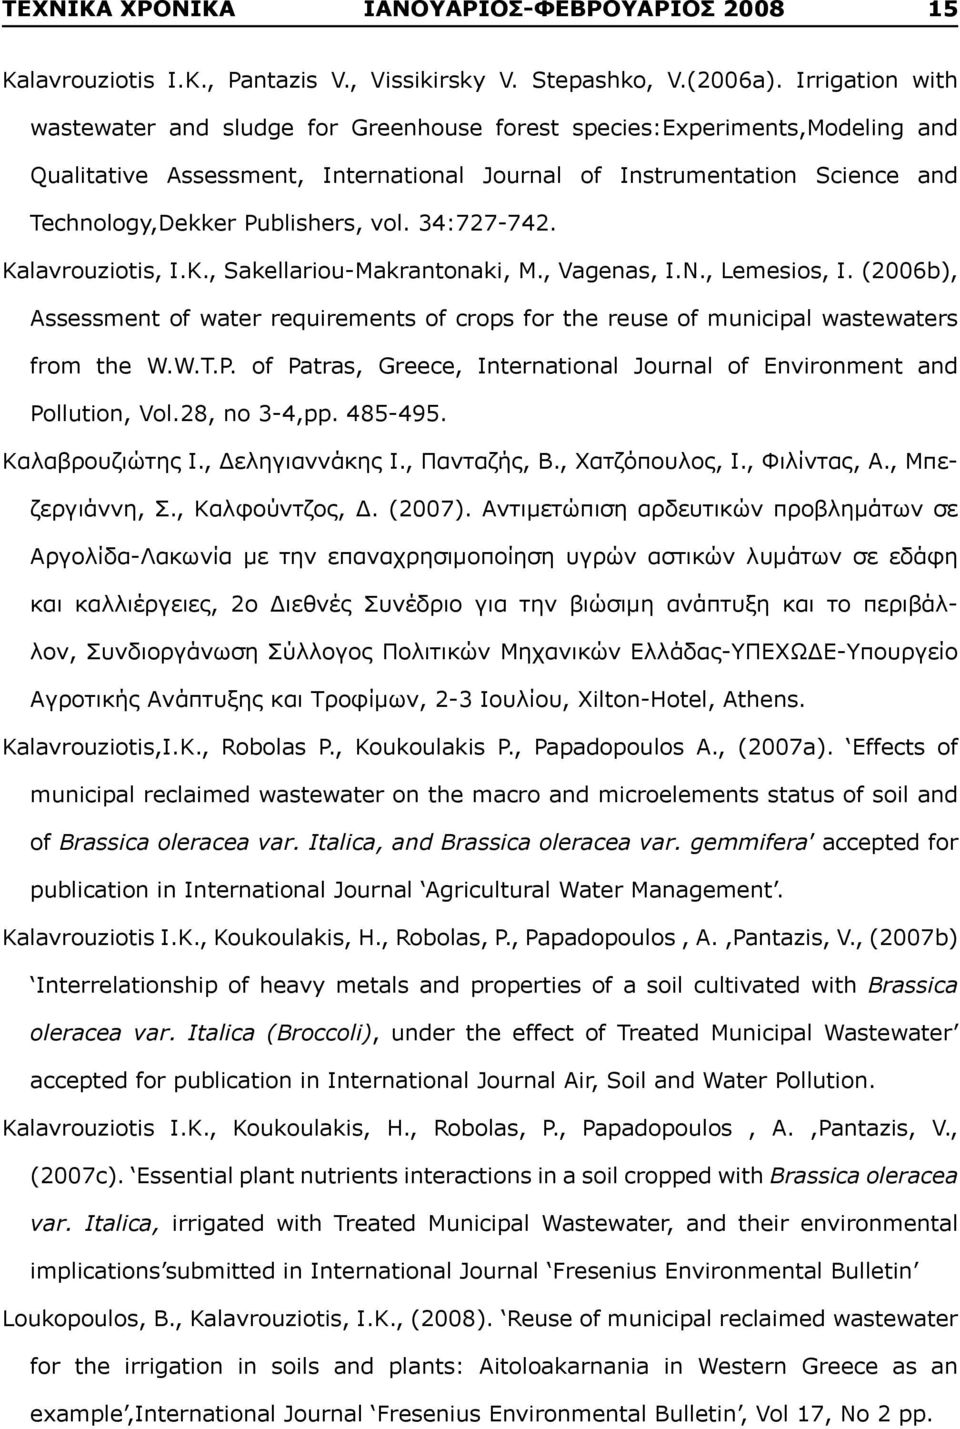 vol. 34:727-742. Kalavrouziotis, I.K., Sakellariou-Makrantonaki, M., Vagenas, I.N., Lemesios, I. (2006b), Assessment of water requirements of crops for the reuse of municipal wastewaters from the W.W.T.